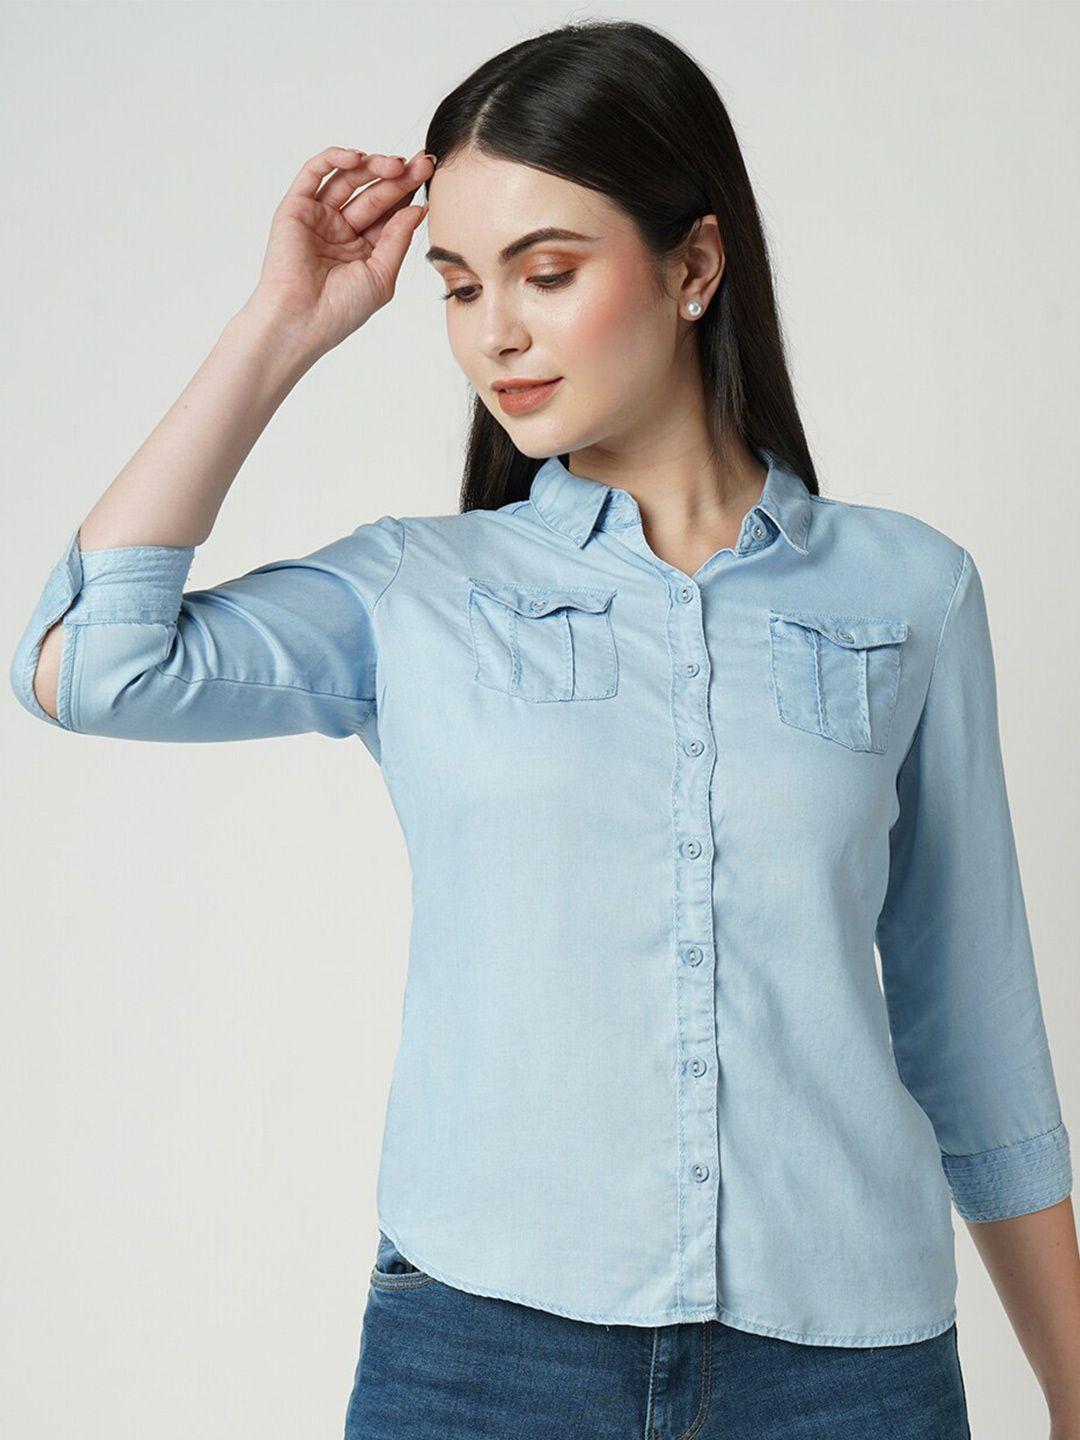 kraus jeans lapel collar three quarter sleeves slim fit opaque casual shirt